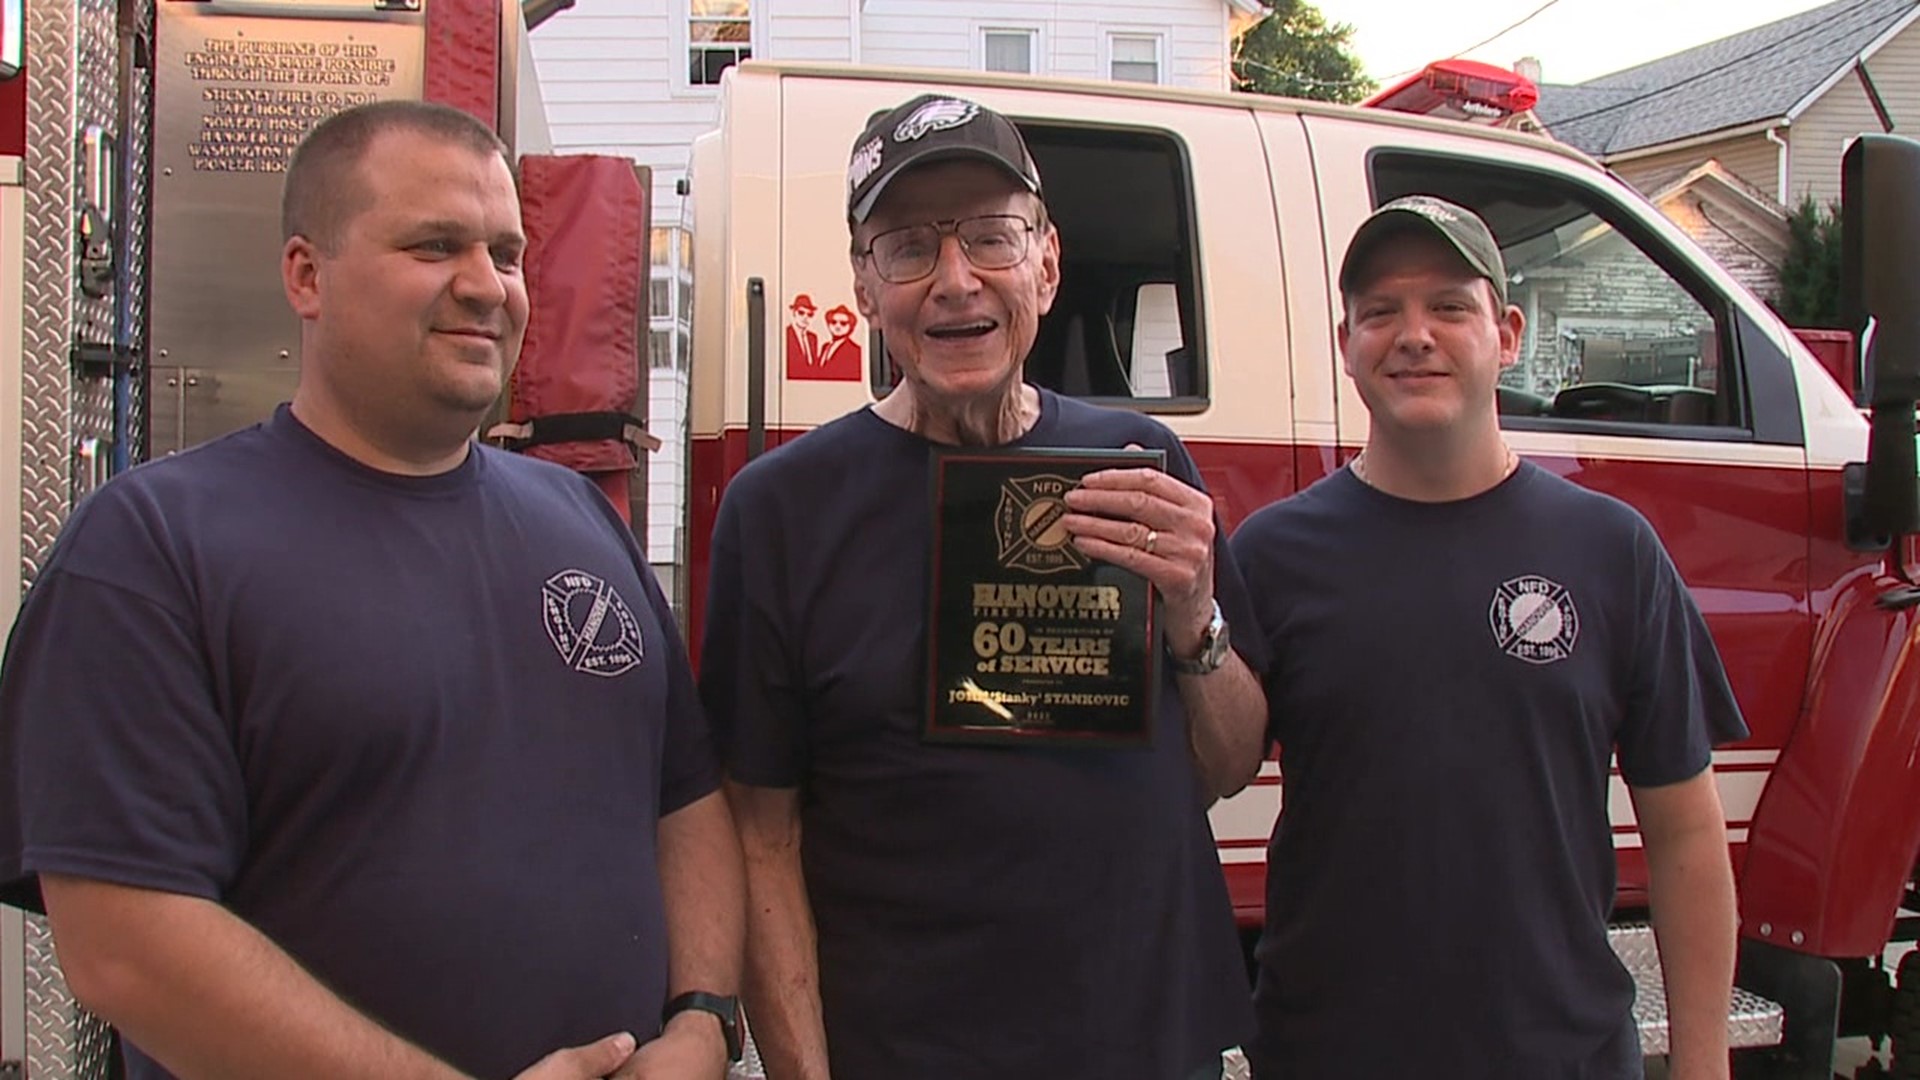 John "Stanky" Stankovic spent the last 60 years as a member of the Nanticoke Fire Department.